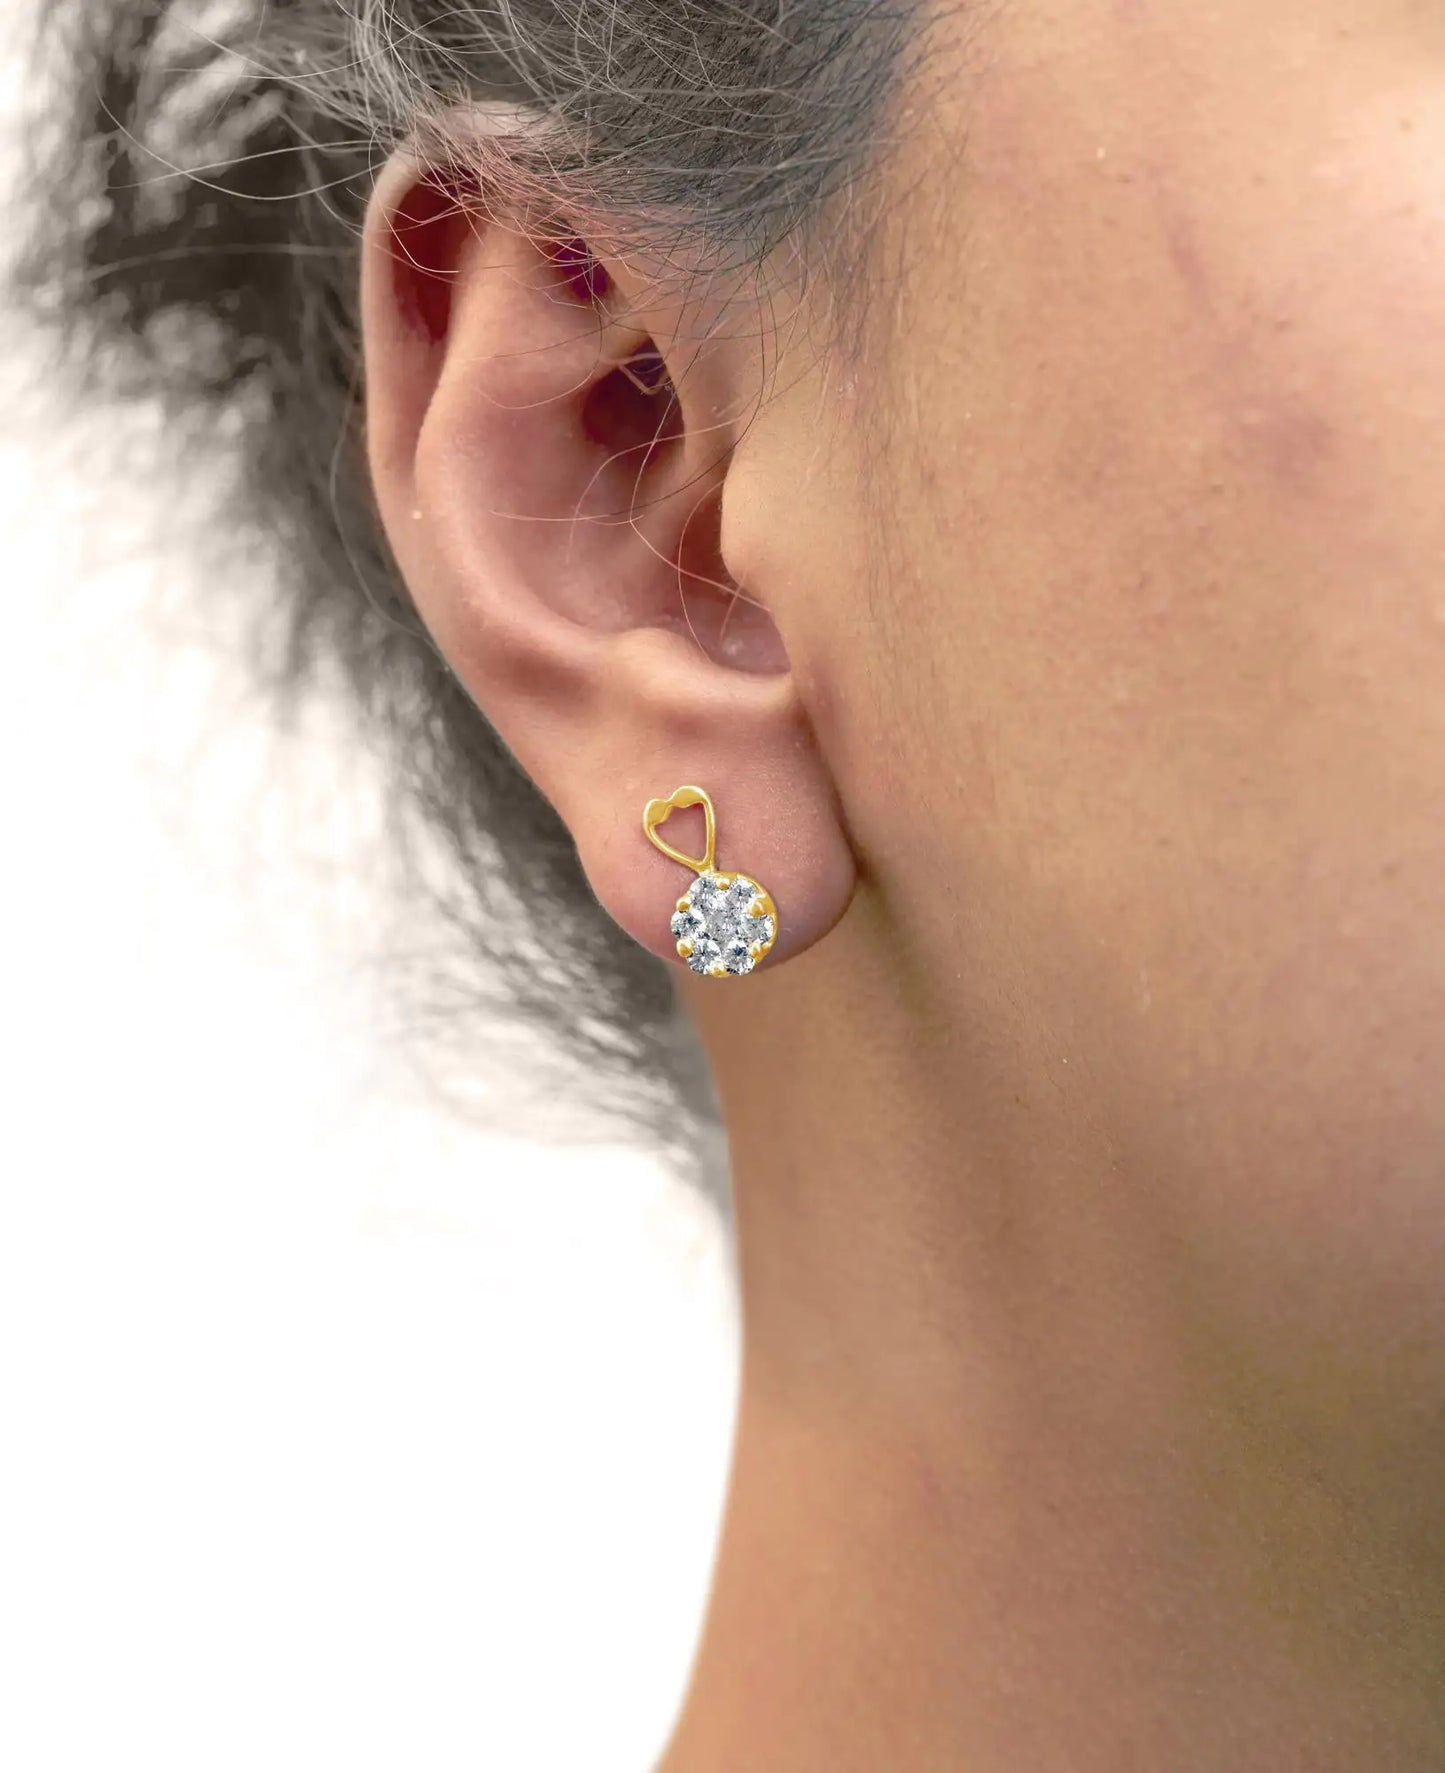 14K Yellow Gold 1ct. TDW Round-cut Diamond Earrings (I-J,SI2-I1)